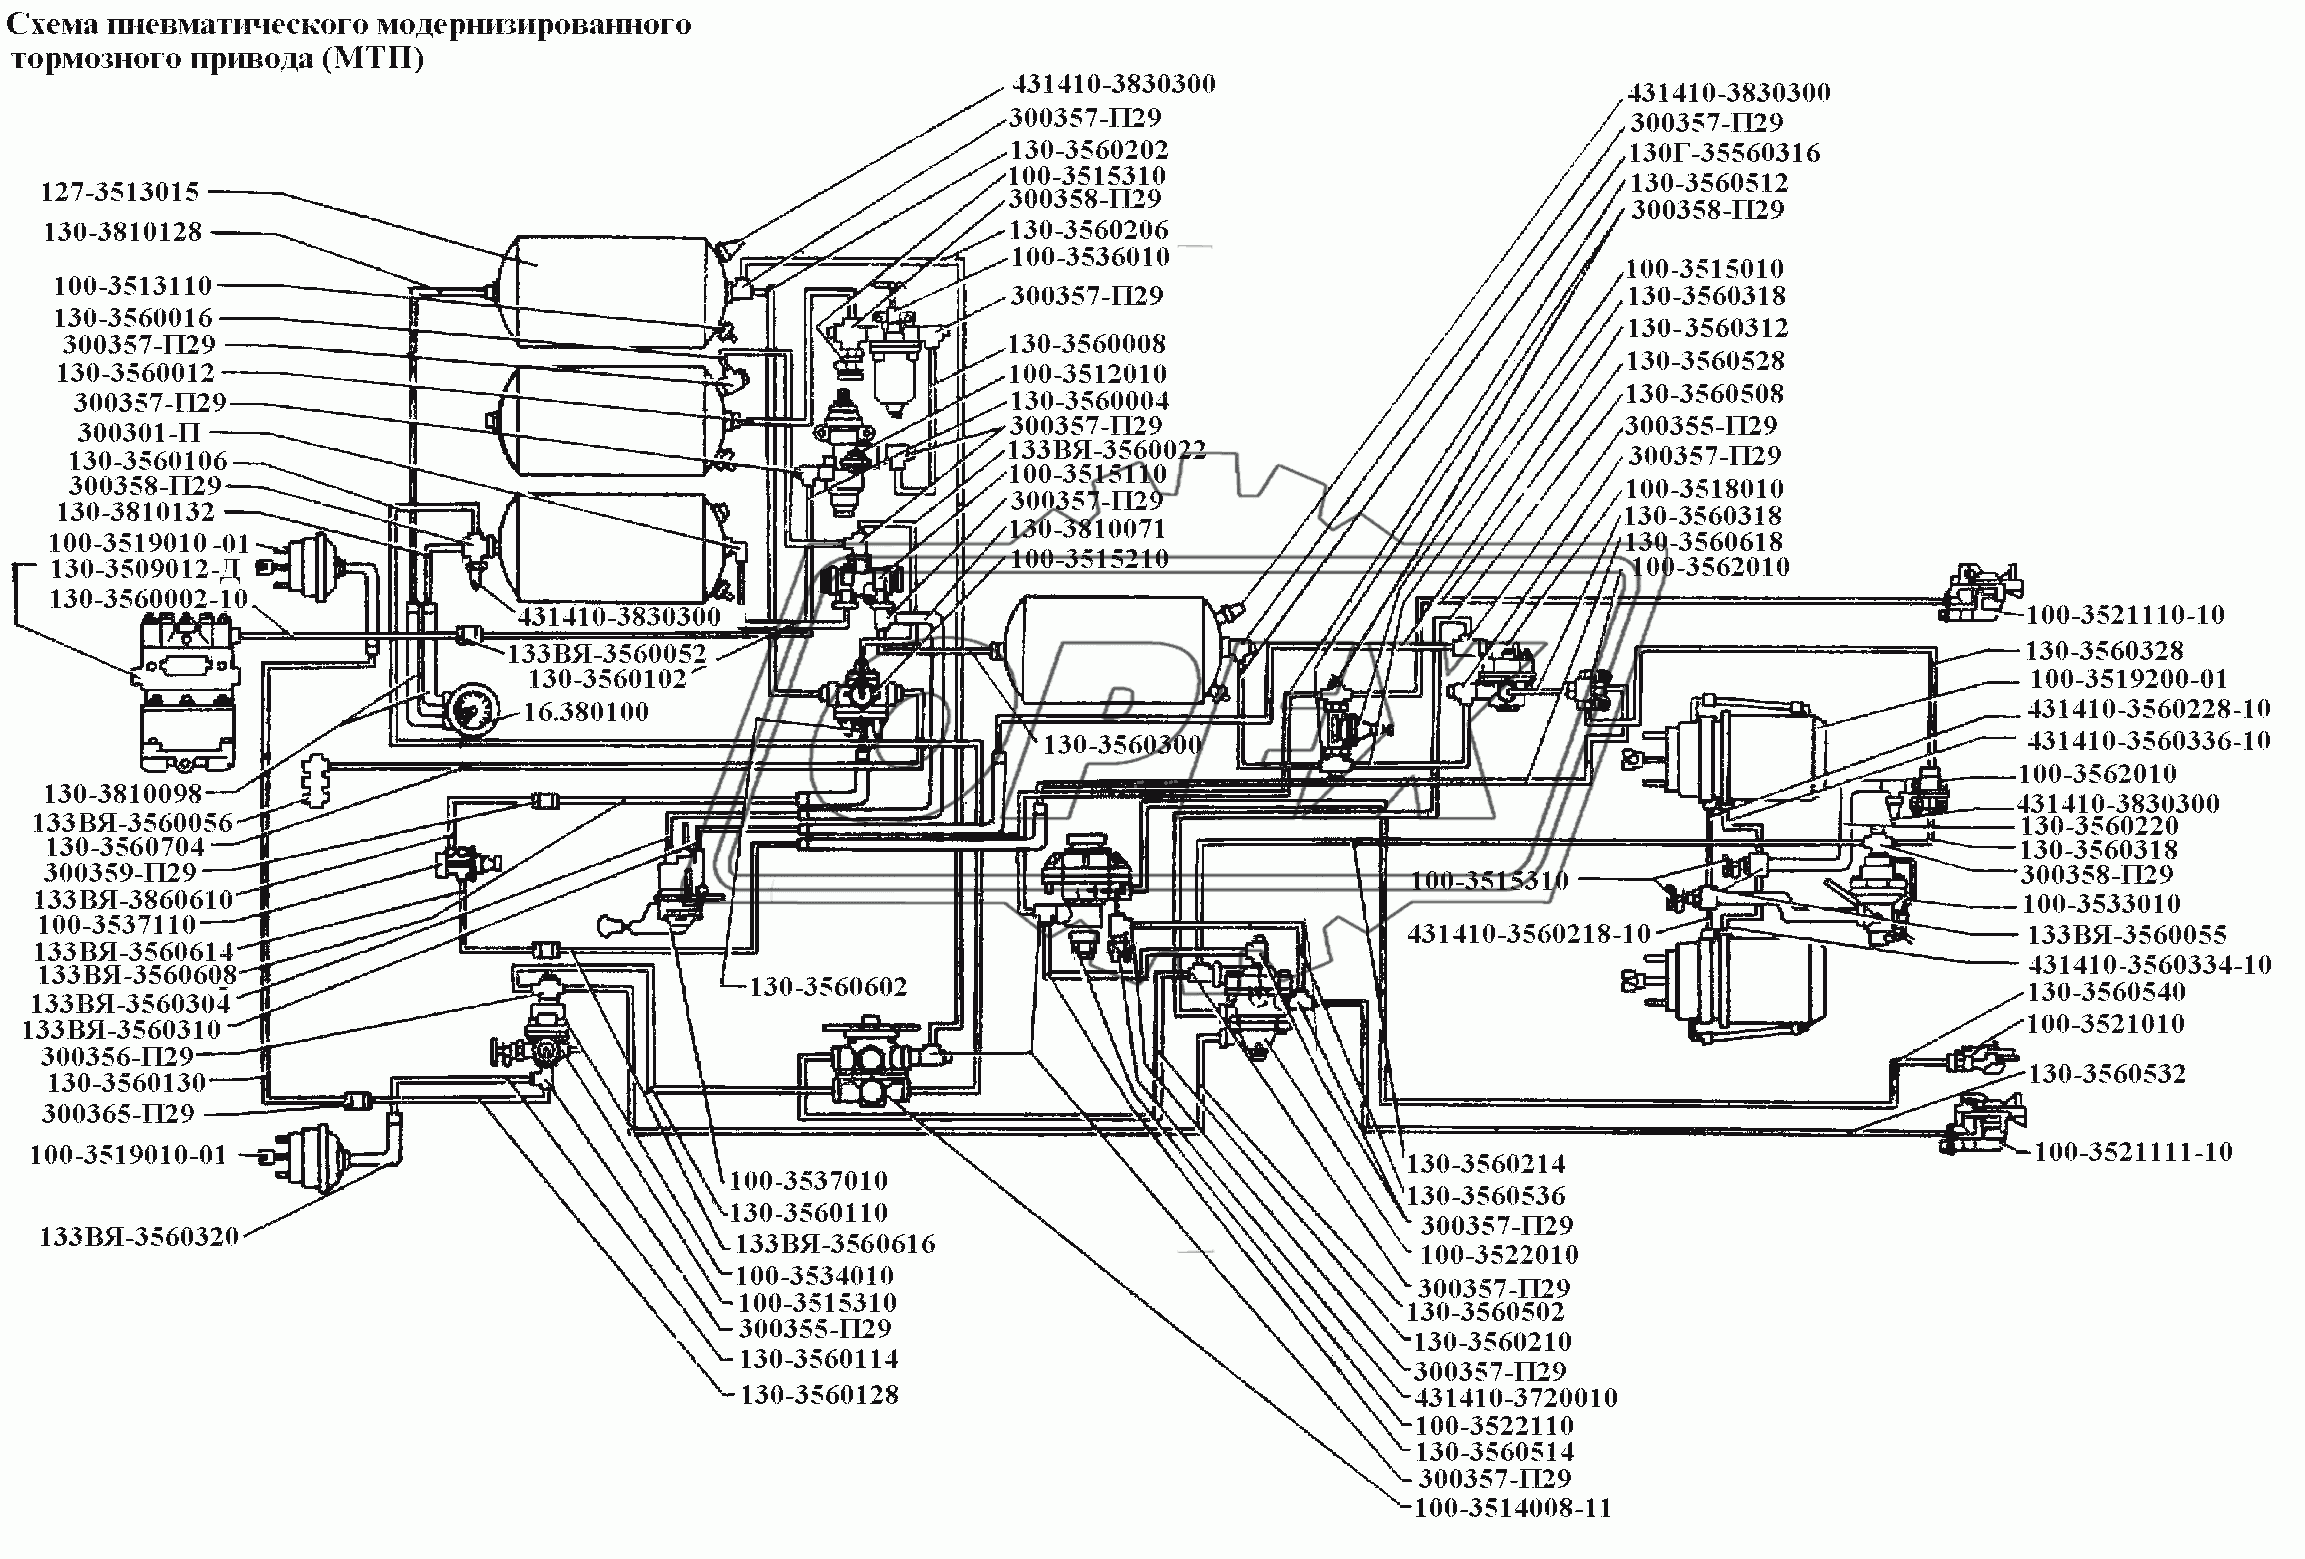 Тормоза\Схема пневматического модернизированного тормозного привода (МТП)